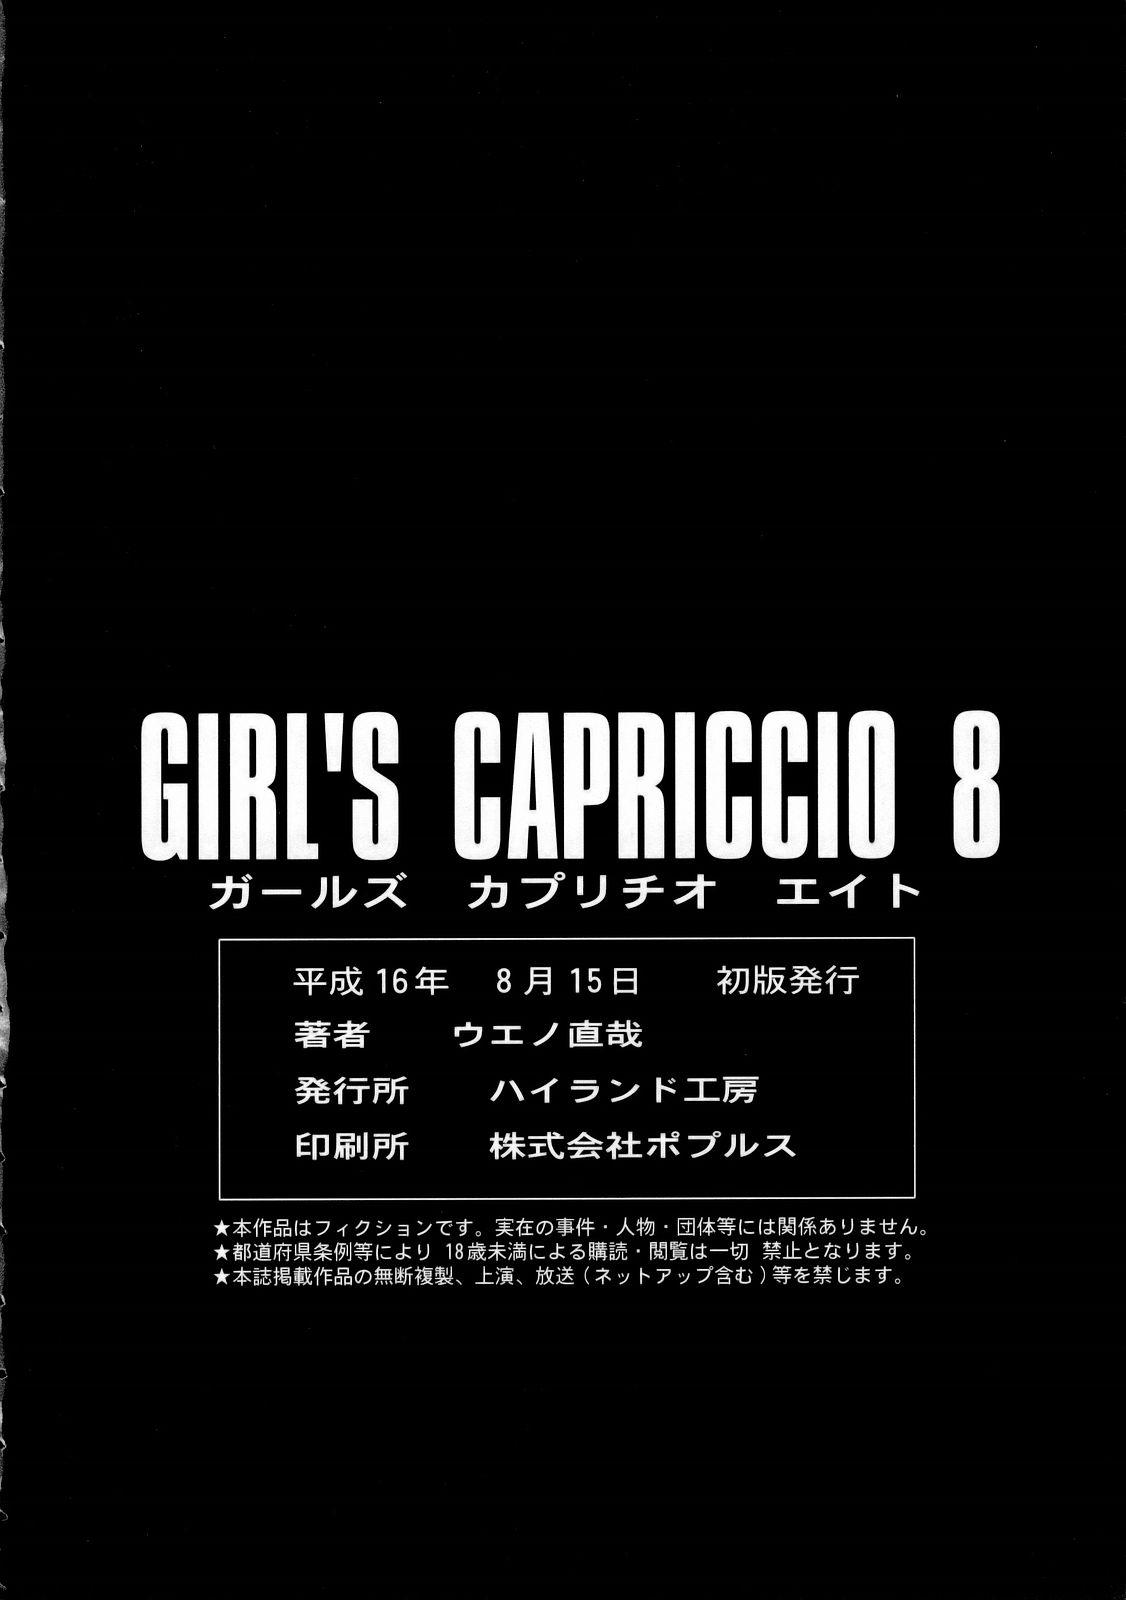 GIRL'S CAPRICCIO 8 30